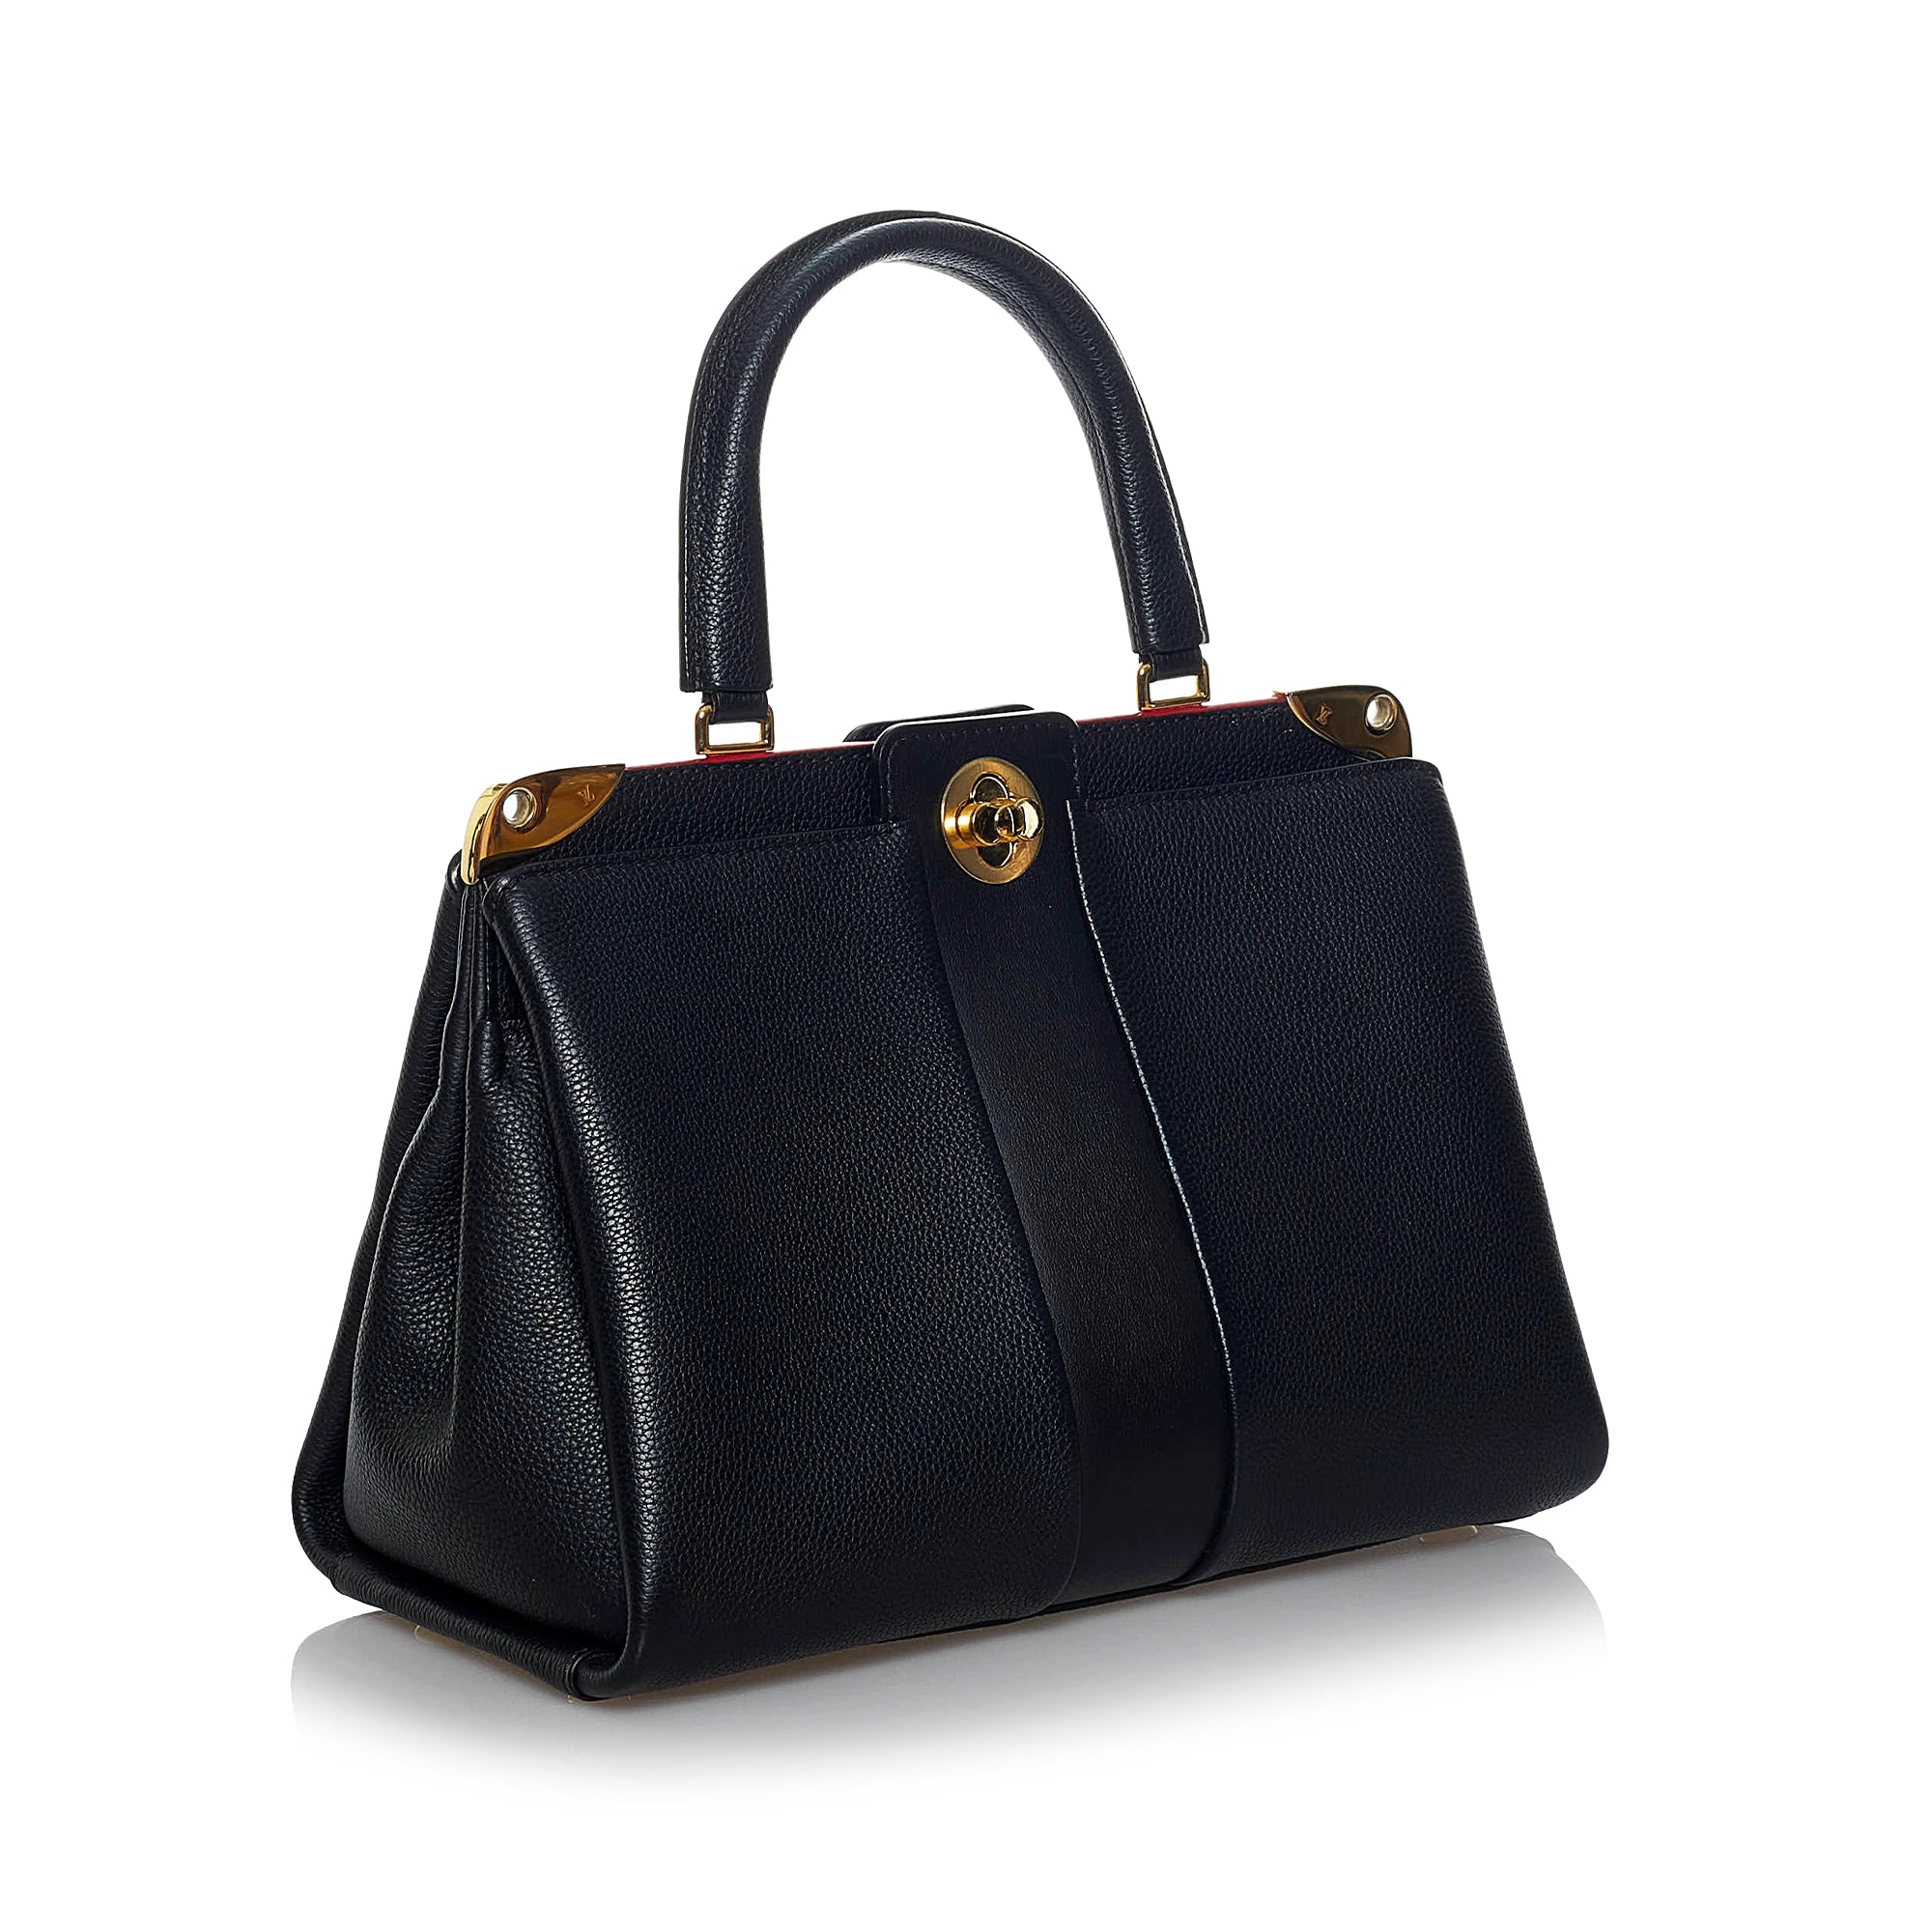 Preloved Louis Vuitton Red and Pink Leather Dora PM Handbag FL1195 92123